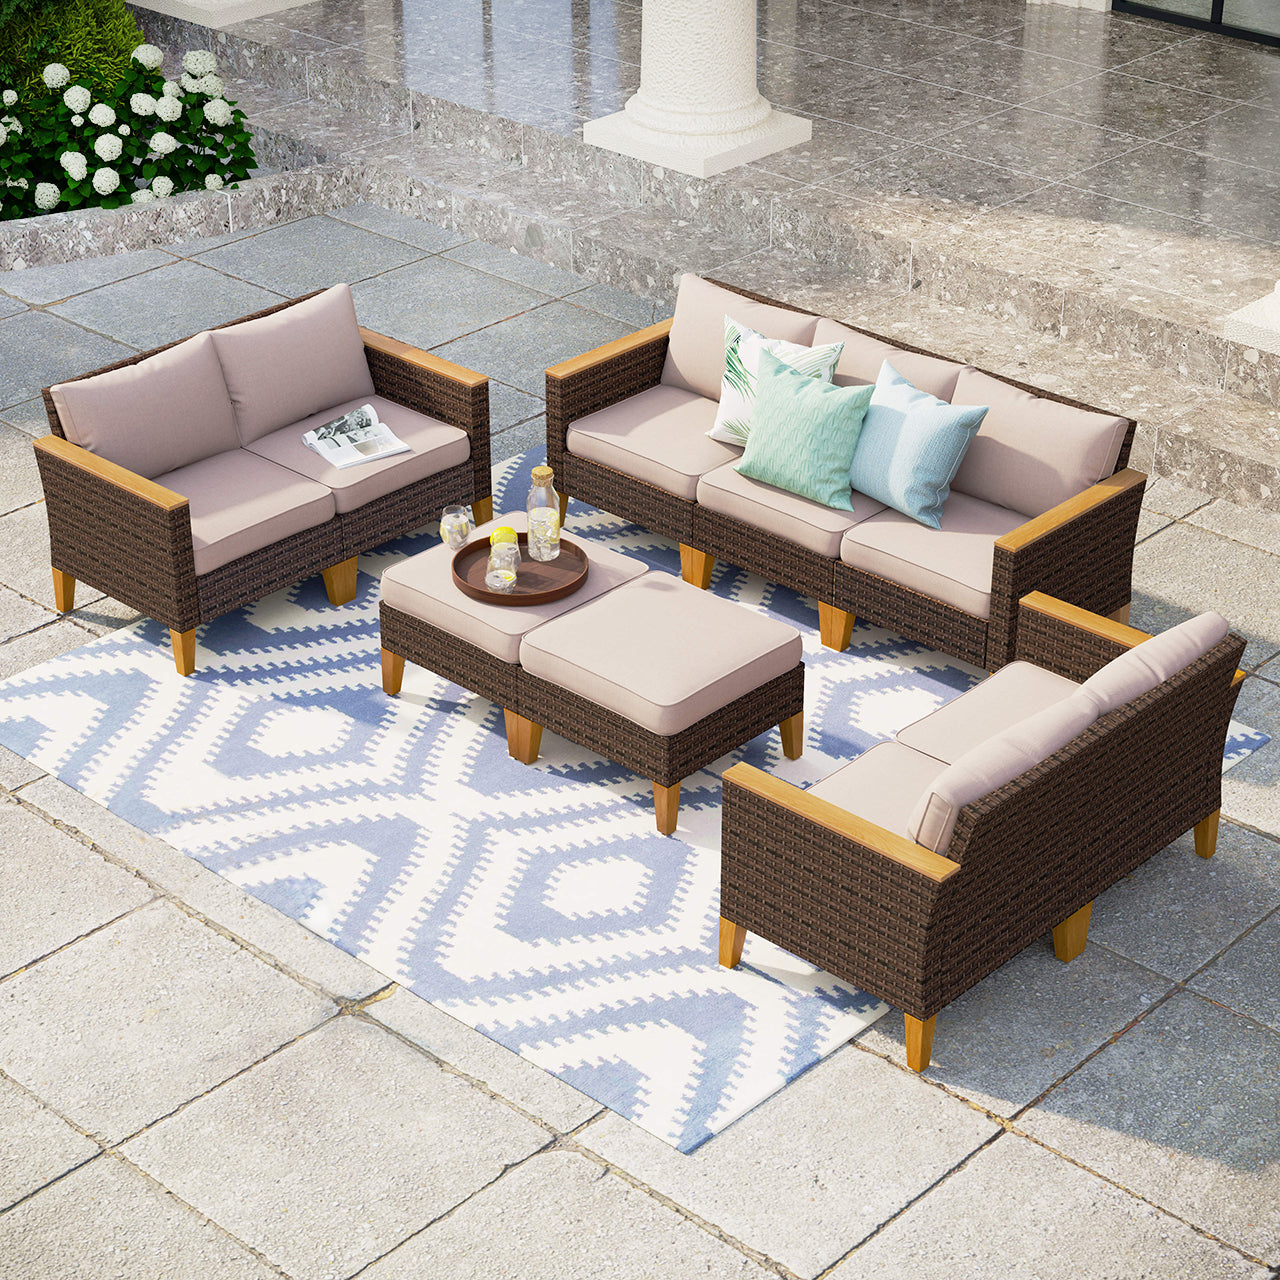 PHI VILLA 9-Piece Luxury Rattan Outdoor Sofa Sectional